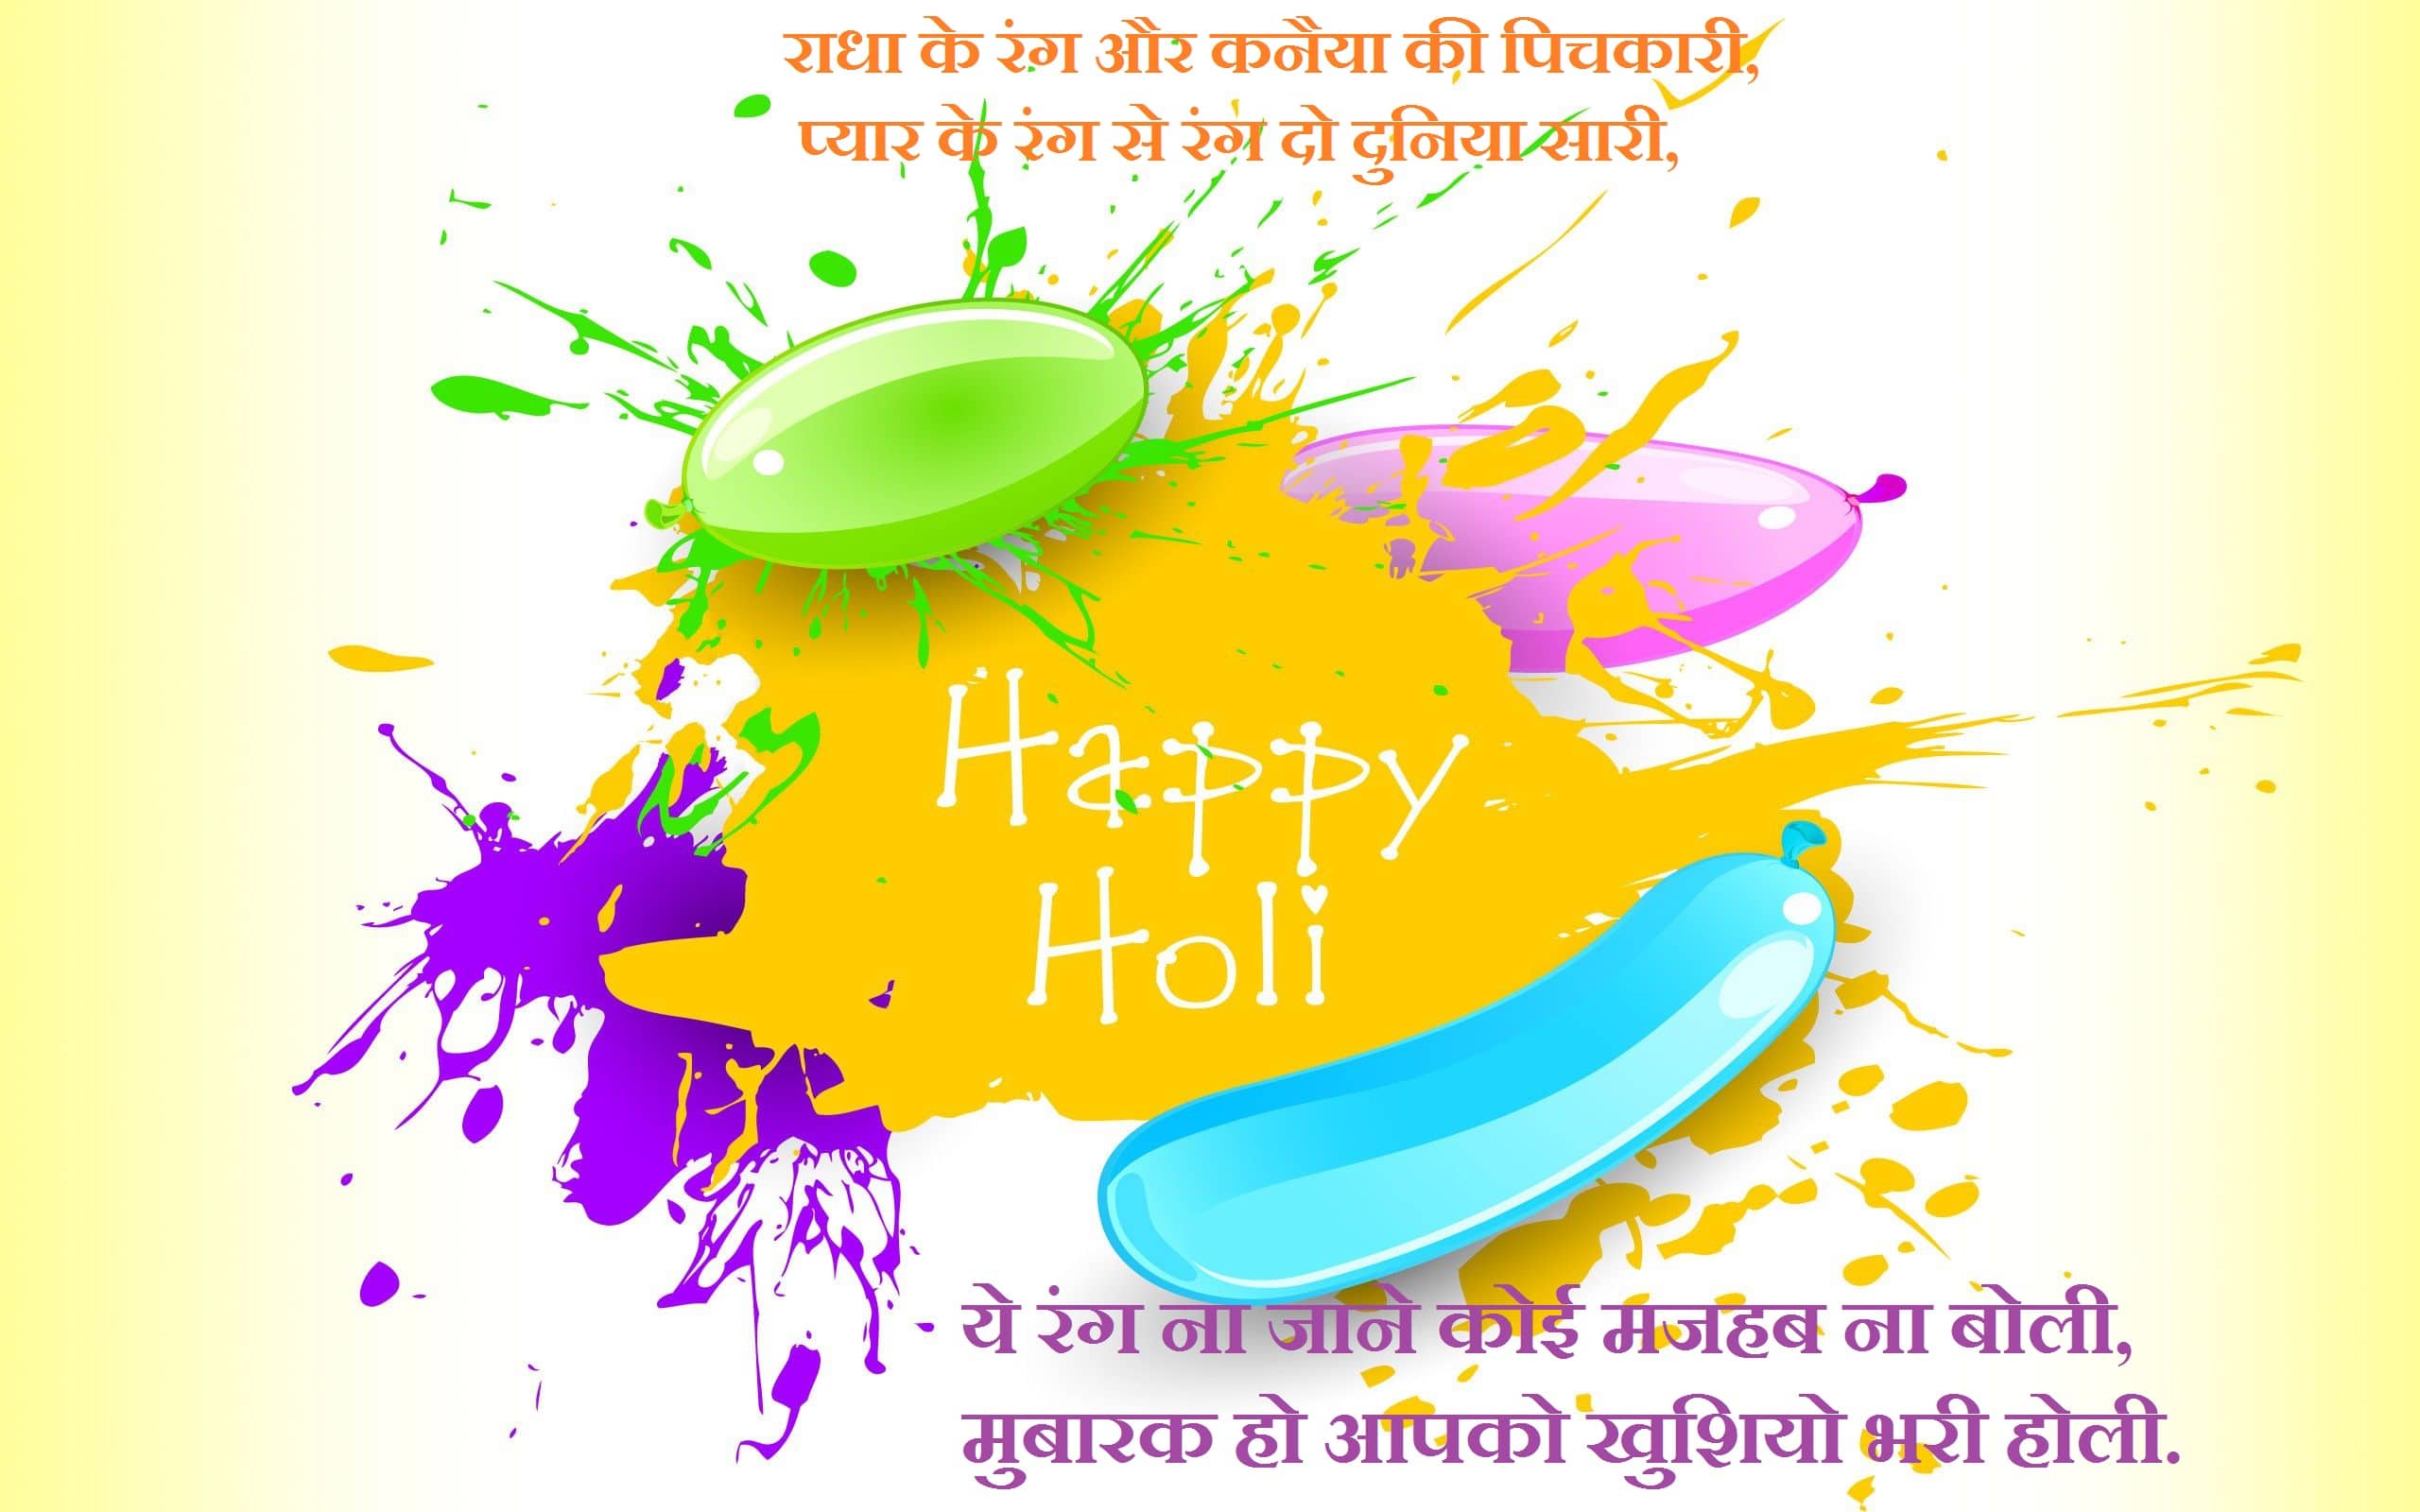 Happy Holi Image, HD Photo, Wallpaper, Whatsapp DP, Profile